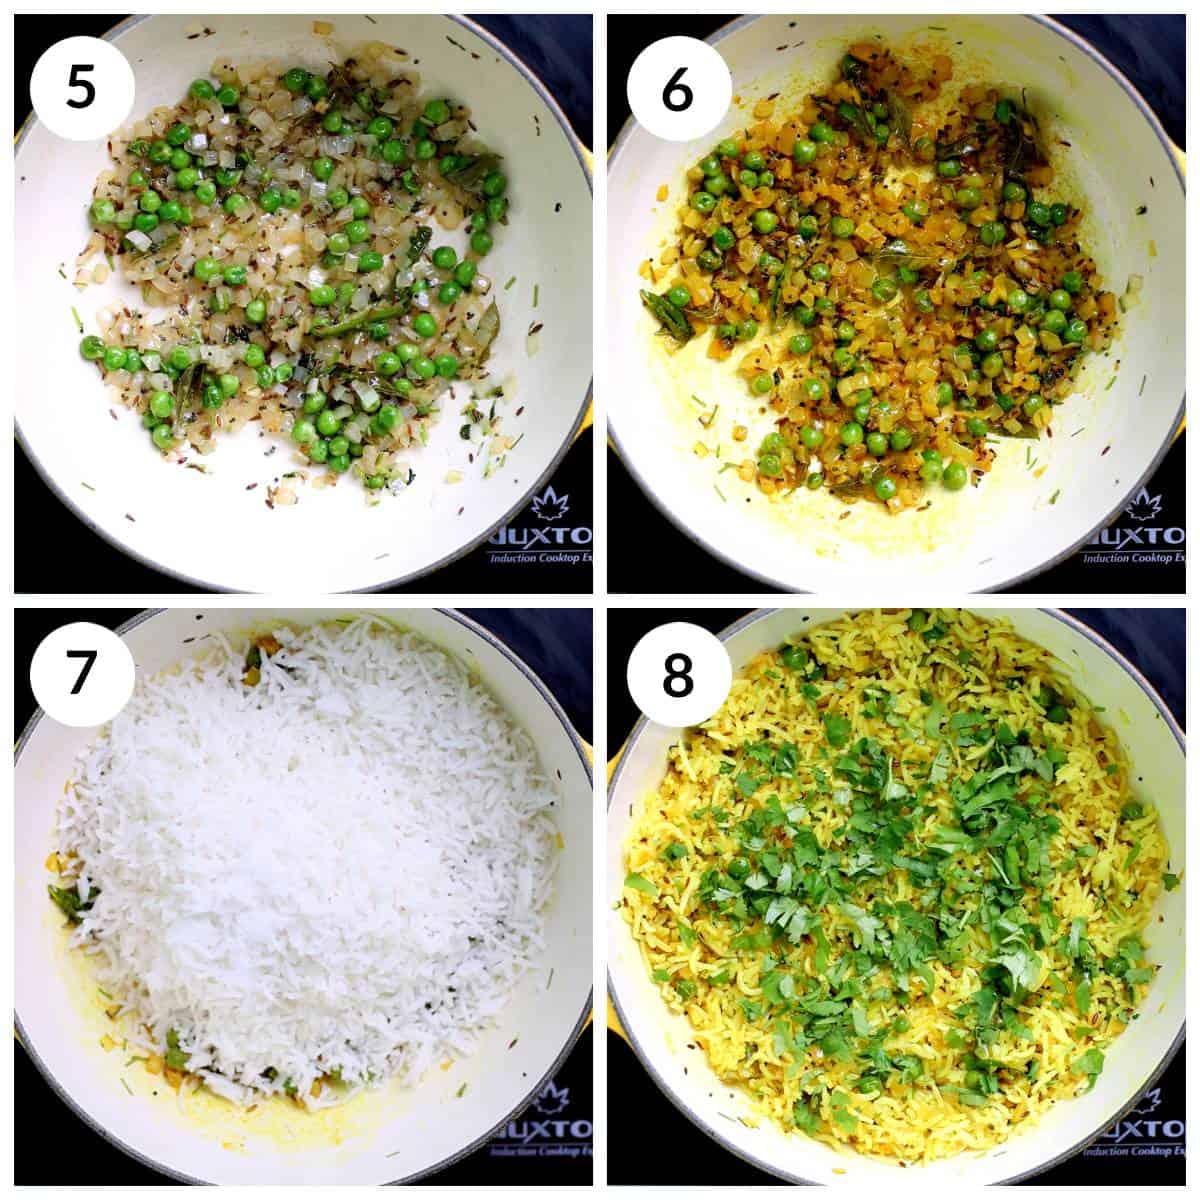 Adding turmeric, rice, lemon juice and cilantro to make phodnicha bhaat